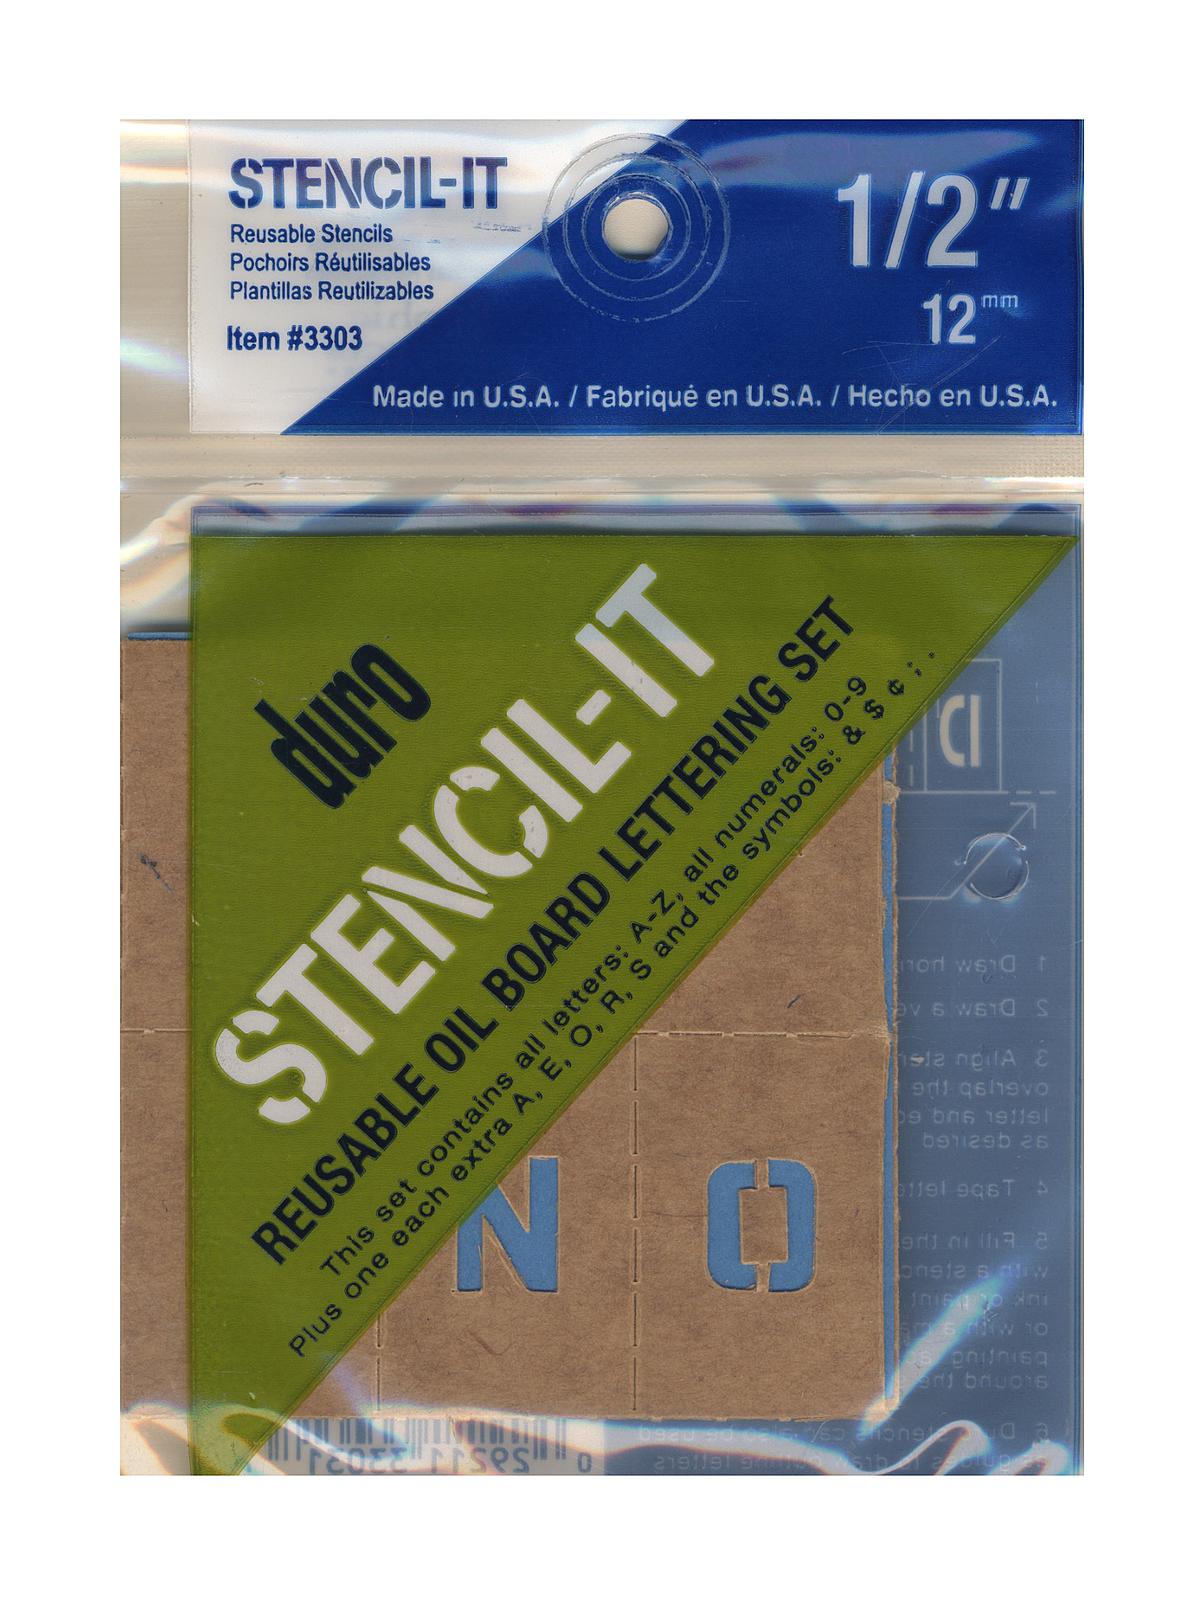 Stencil-it Reusable Oilboard Lettering Sets 1 2 In. 1 2 In.